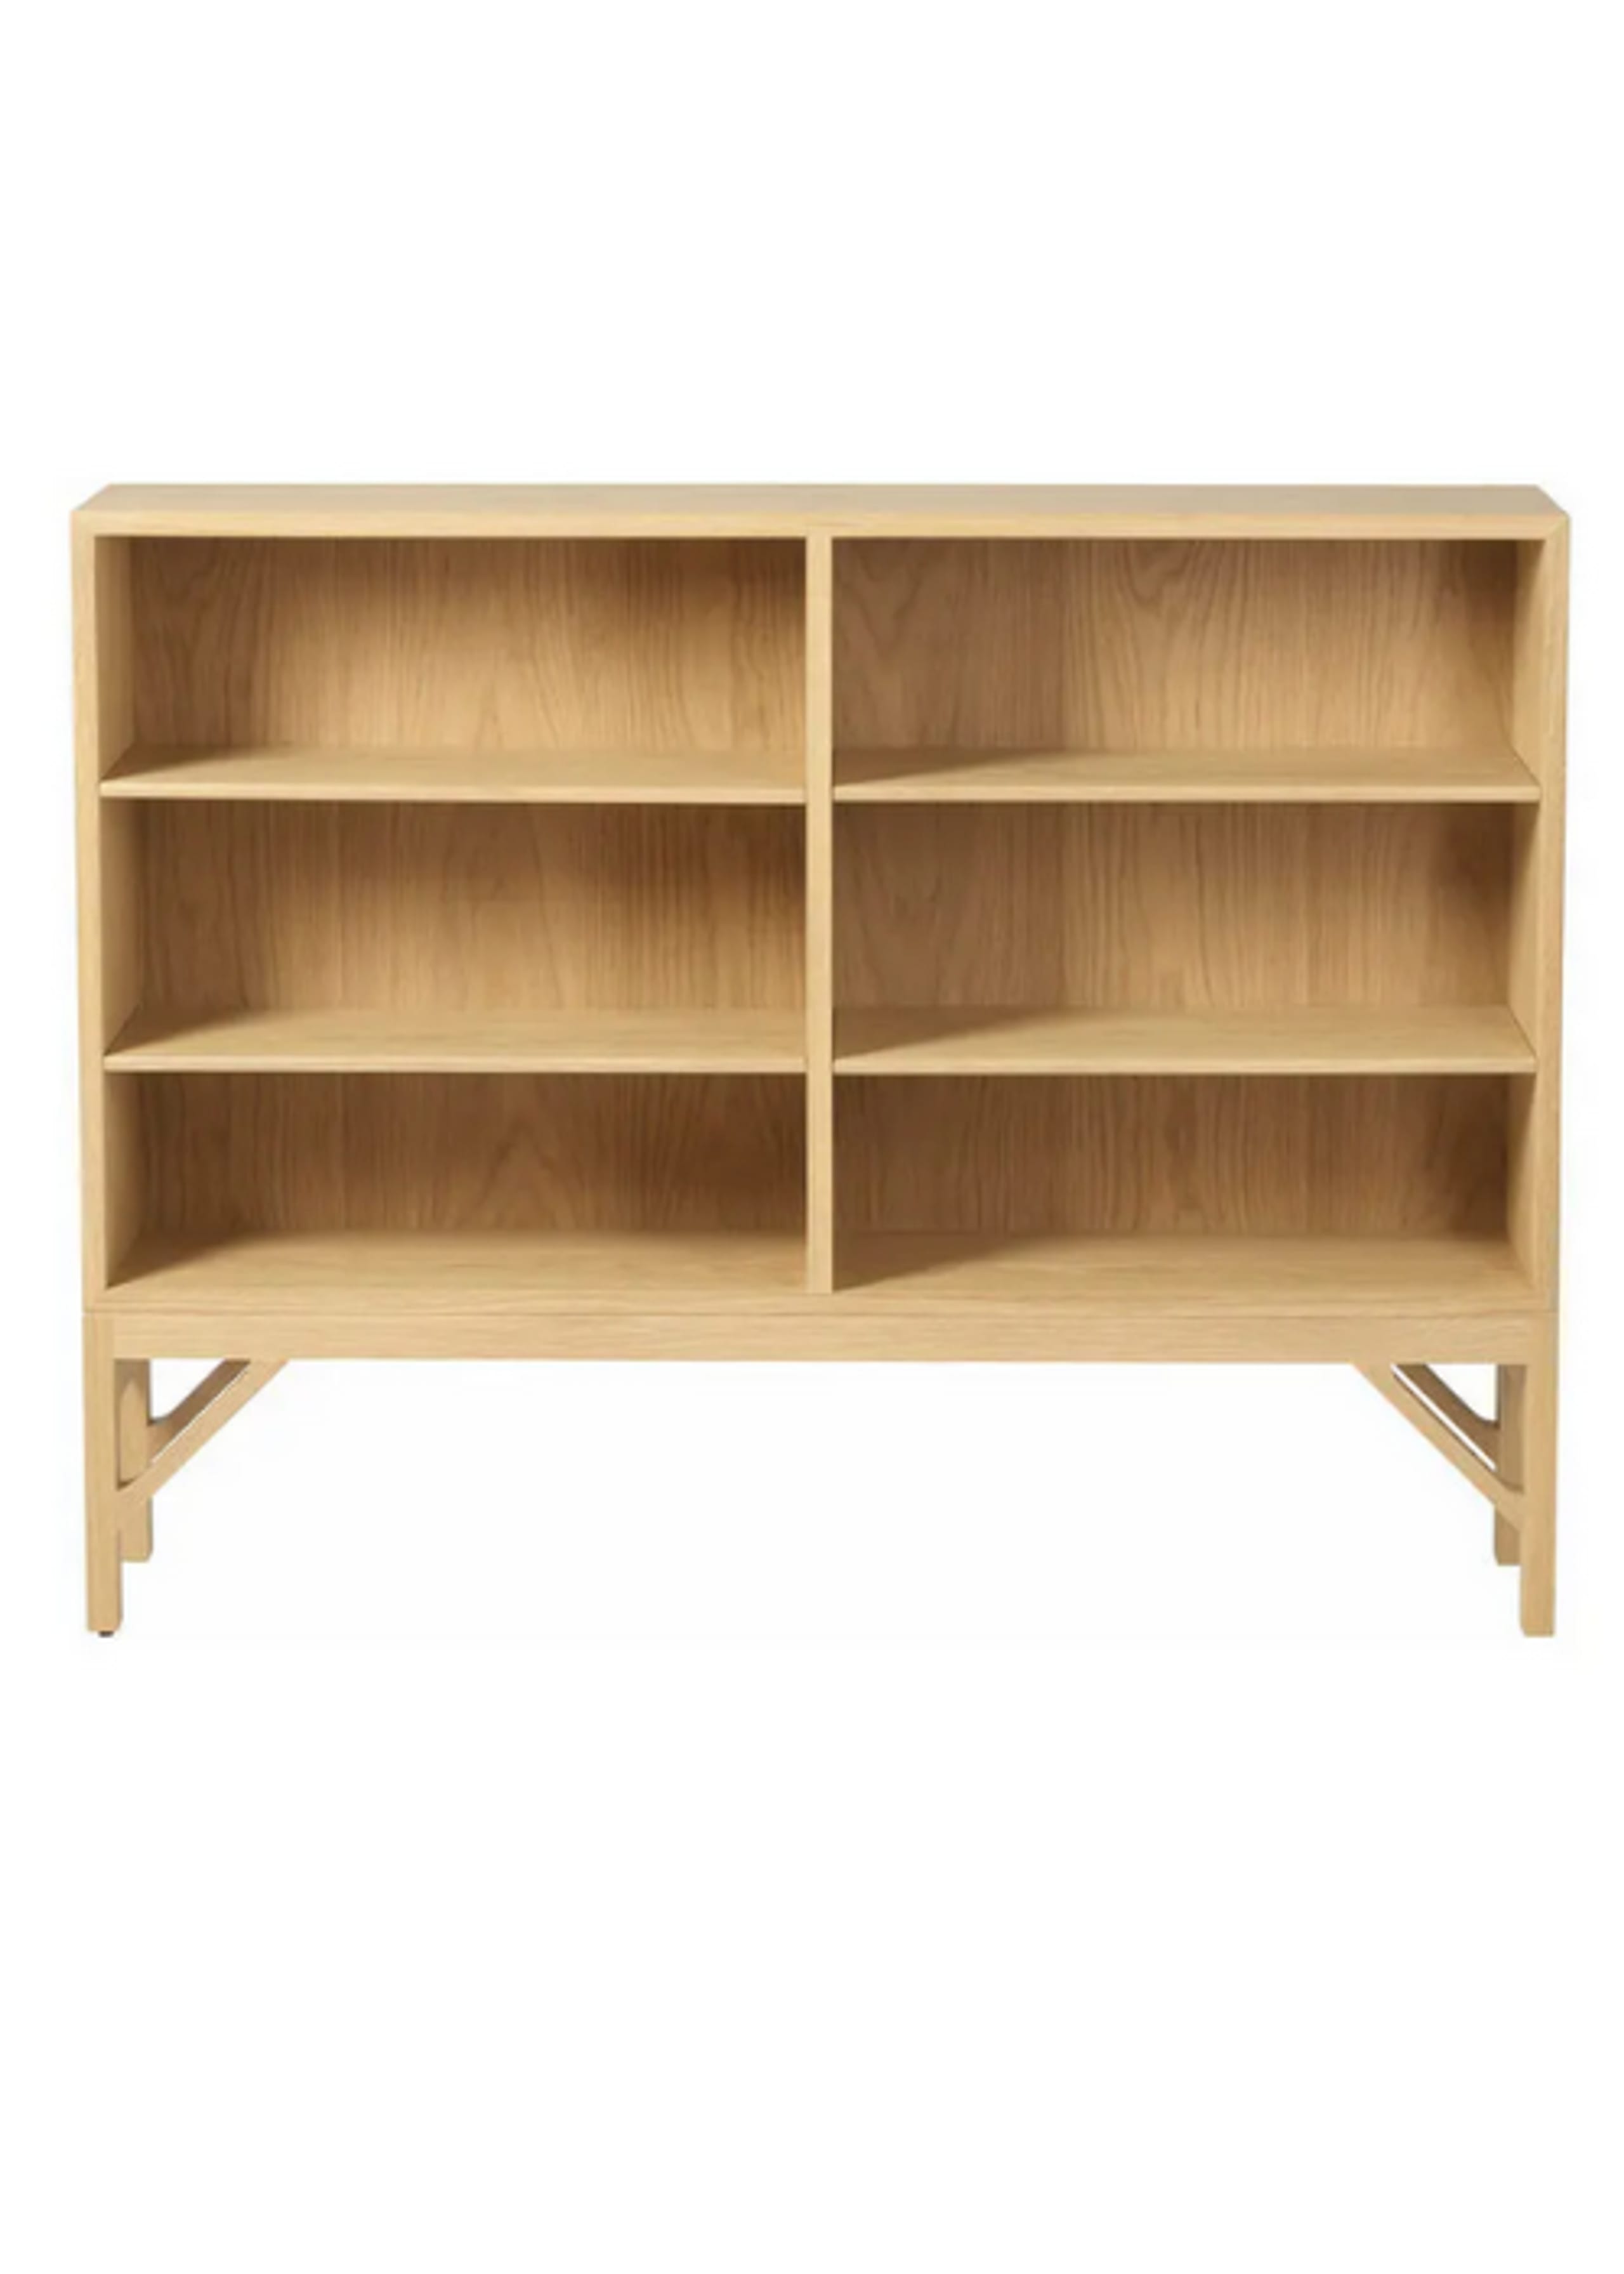 FDB Møbler / Furniture - Reol - A153 - Reol - Eg - Lakeret